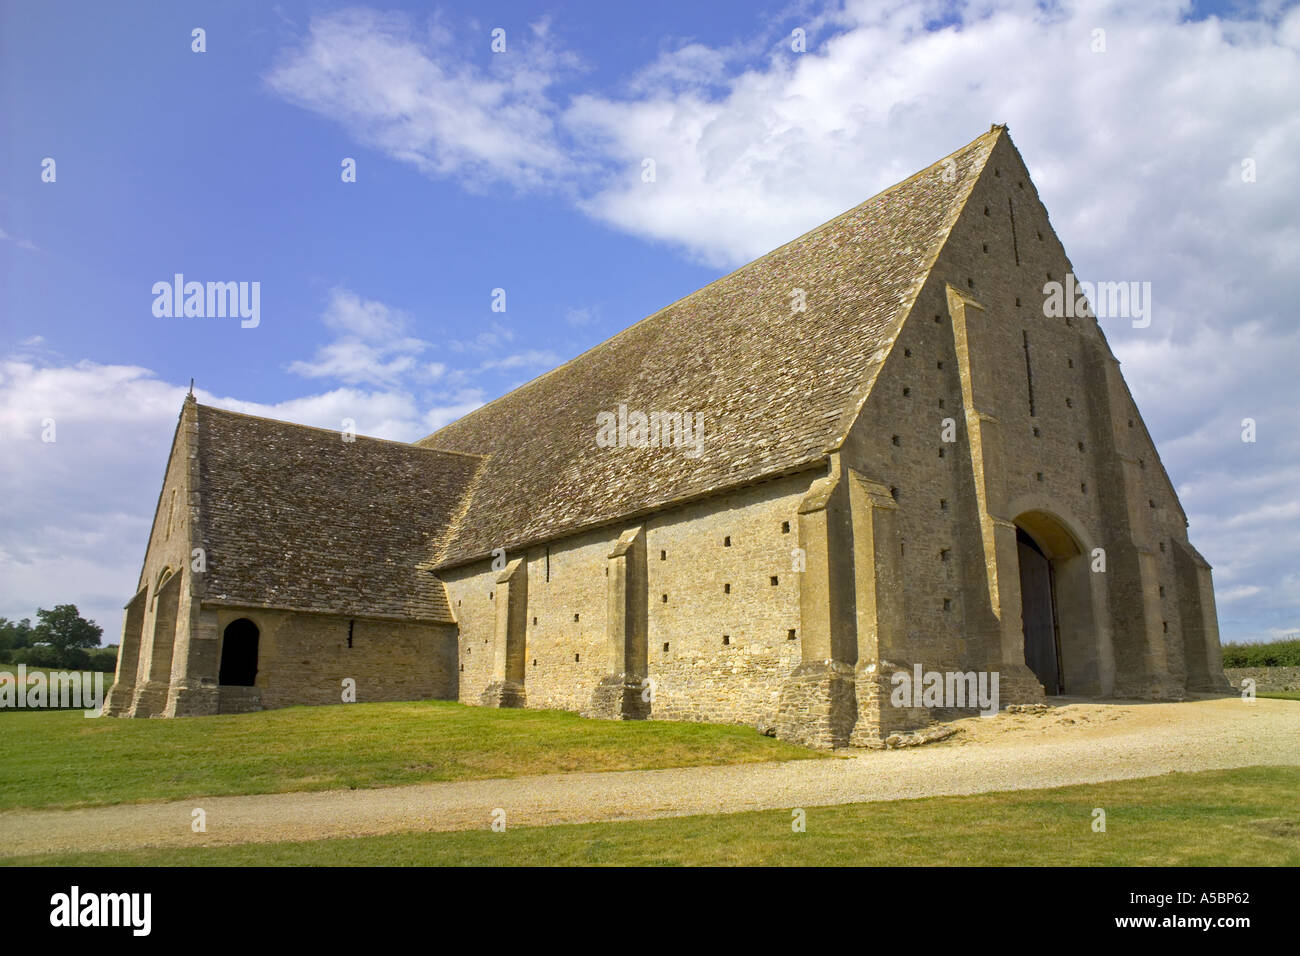 Great Coxwell 14th century medieval tithe or monastic grange storage barn near Faringdon Oxfordshire England UK JMH0436 Stock Photo